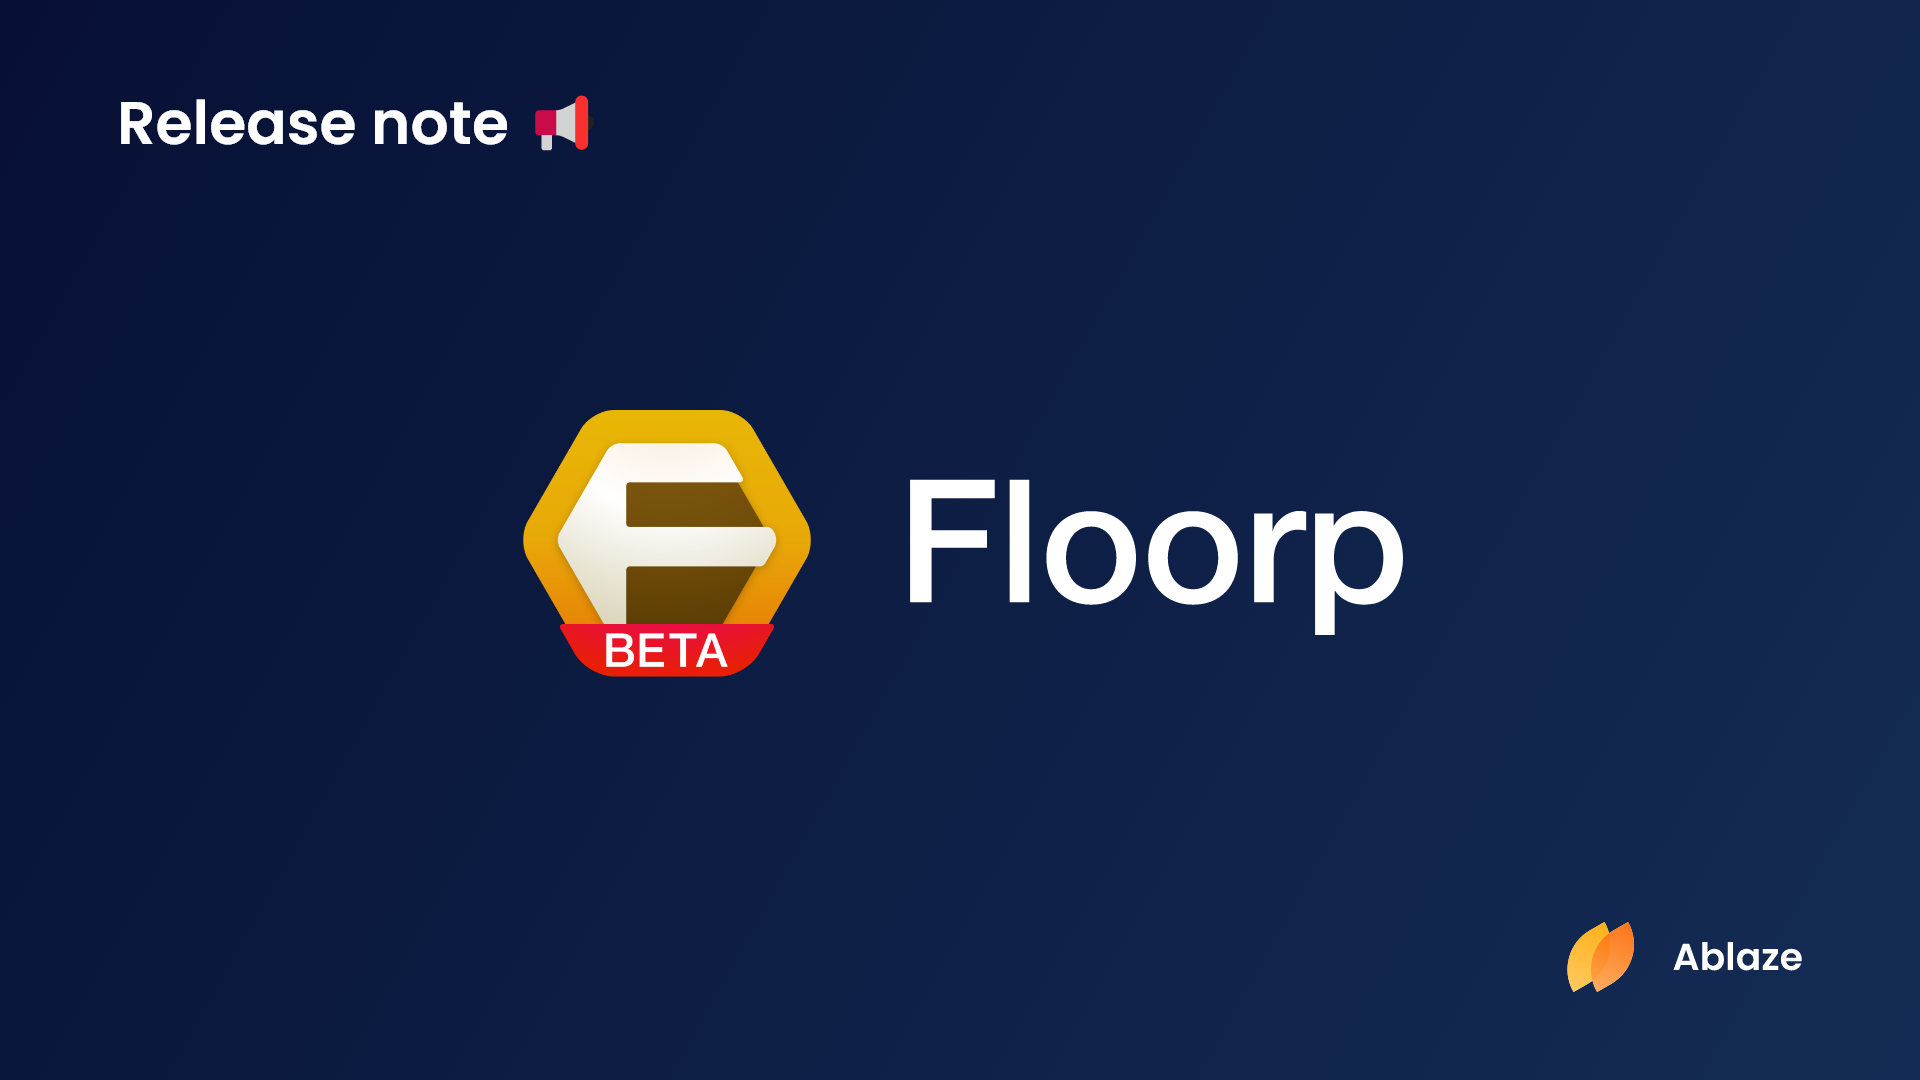 Floorp ブラウザー | バージョン11.0.0 の提供と重大な変更について